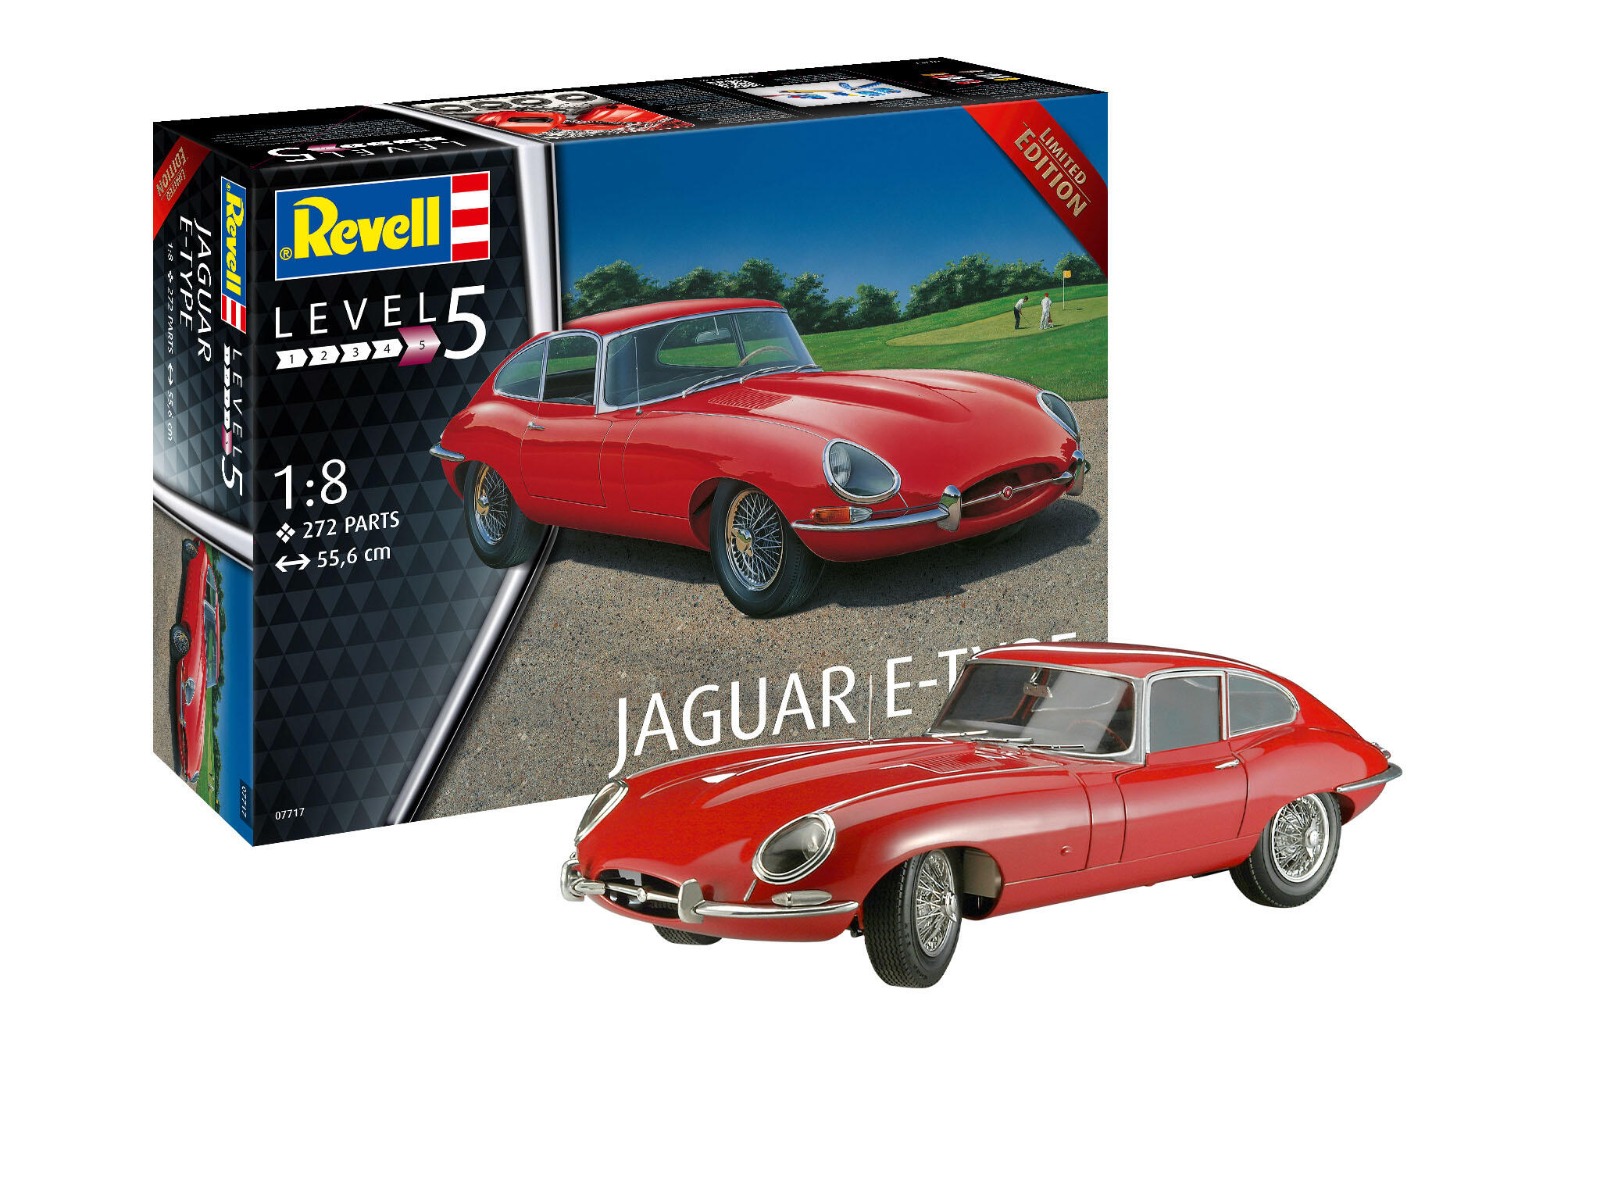 Revell 07717 | Jaguar E-Type | 1:8